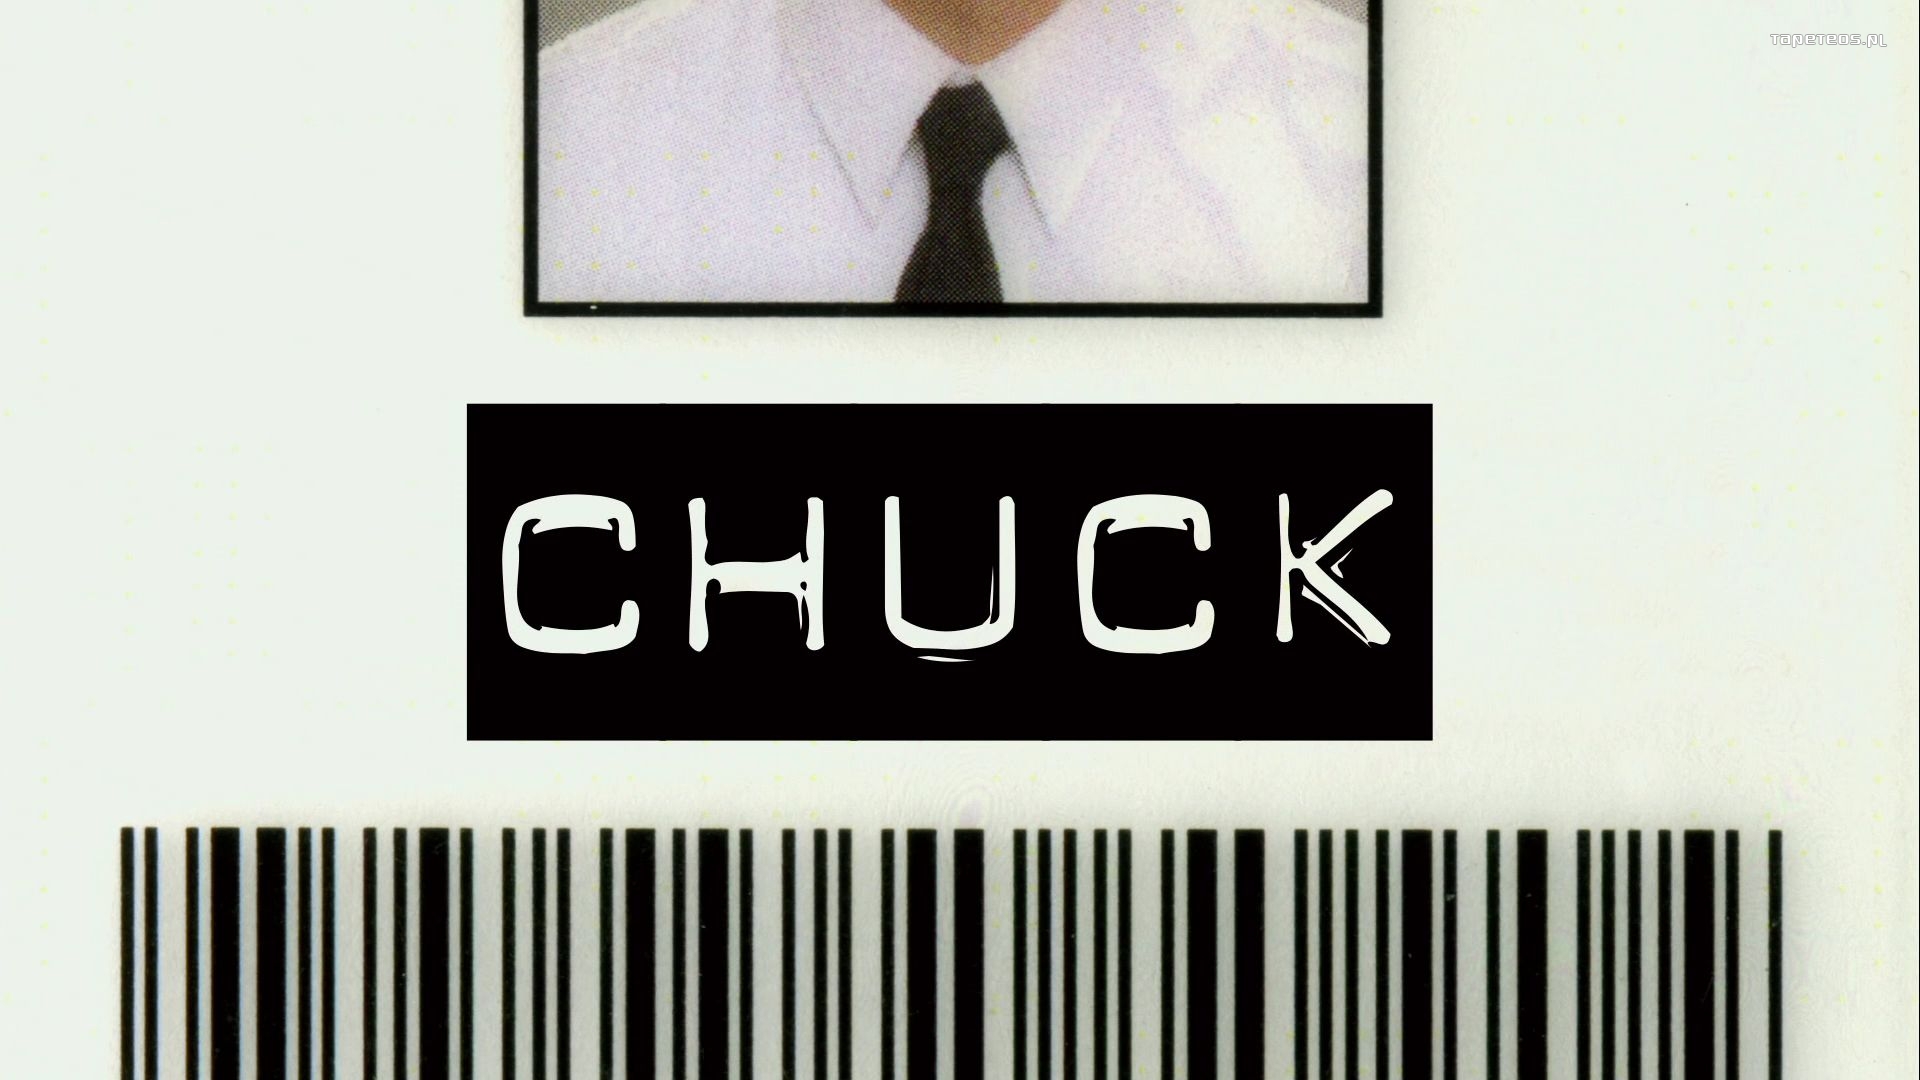 Chuck 001